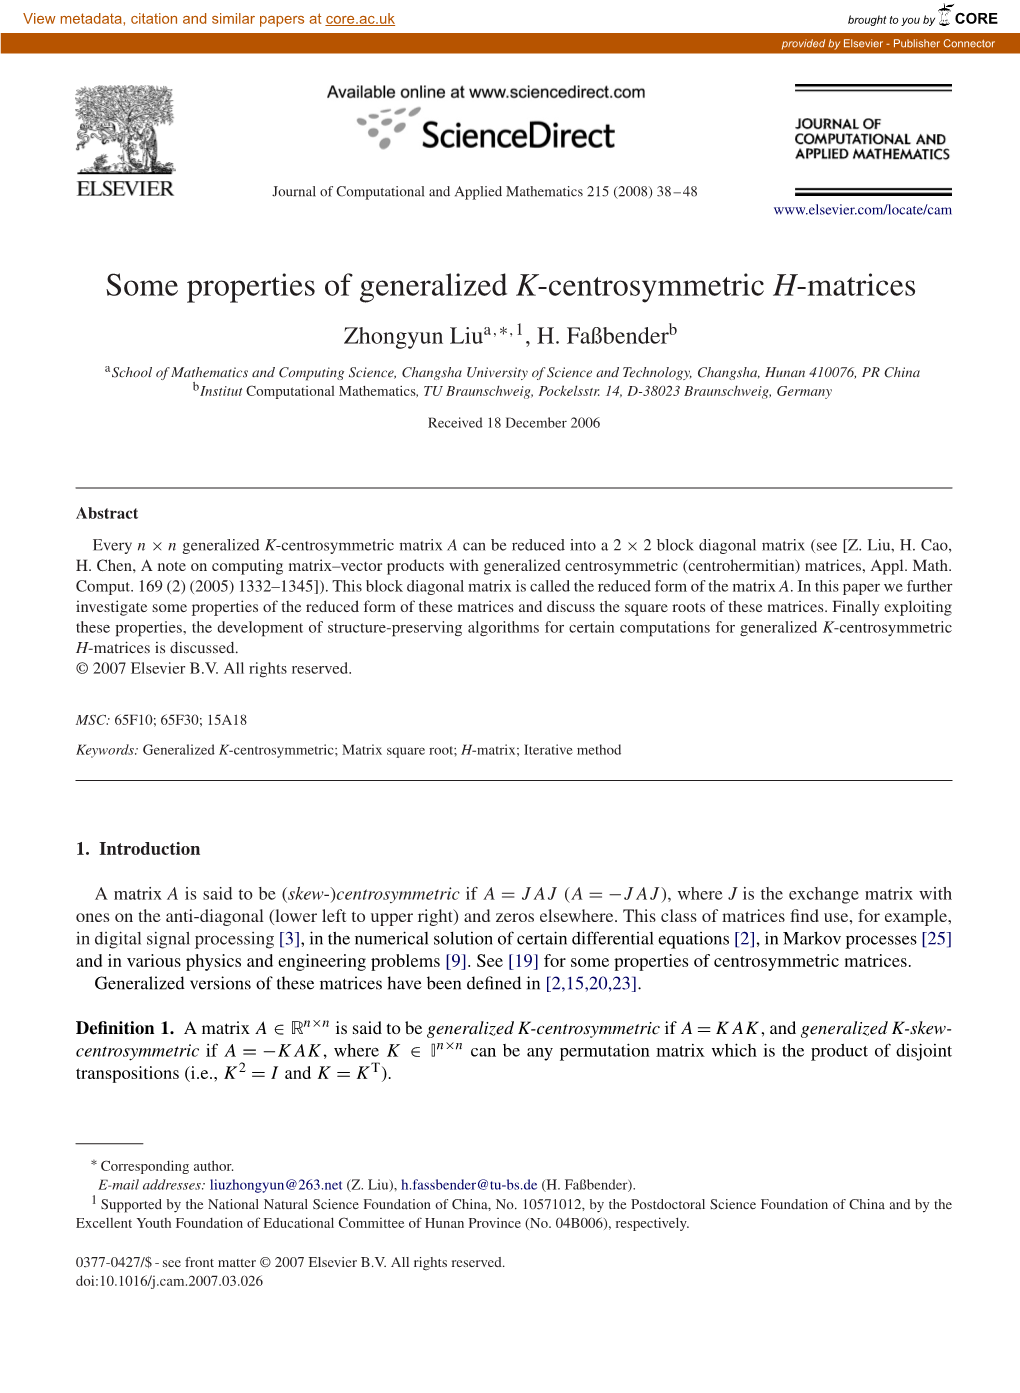 Some Properties of Generalized K-Centrosymmetric H-Matrices Zhongyun Liua,∗,1, H